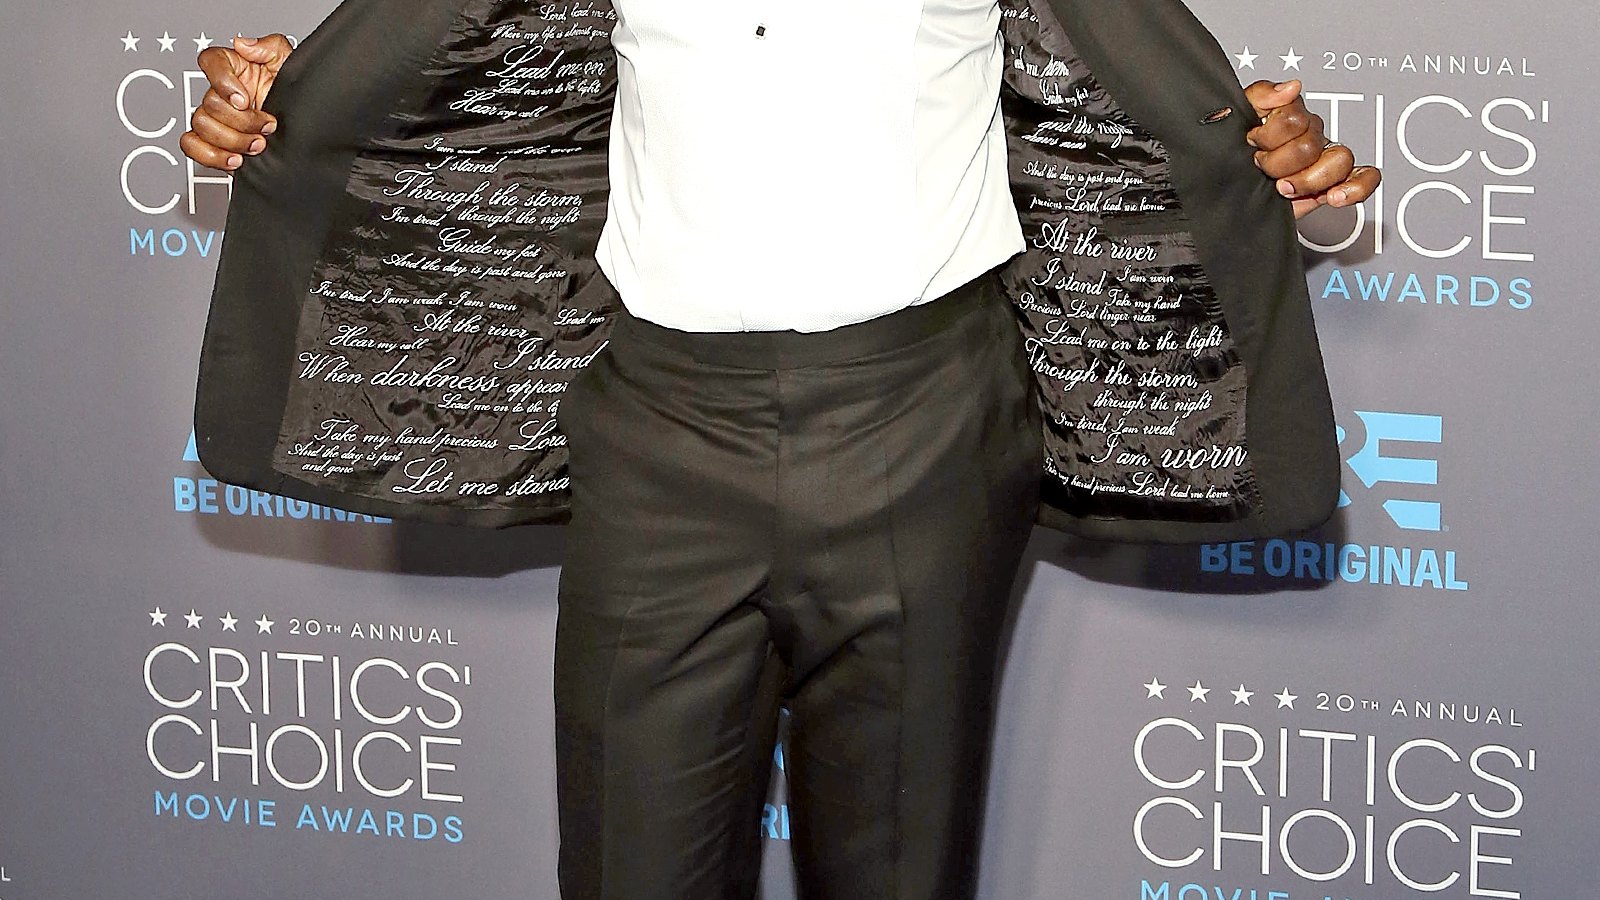 David Oyelowo at The 20th Annual Critics' Choice Movie Awards.